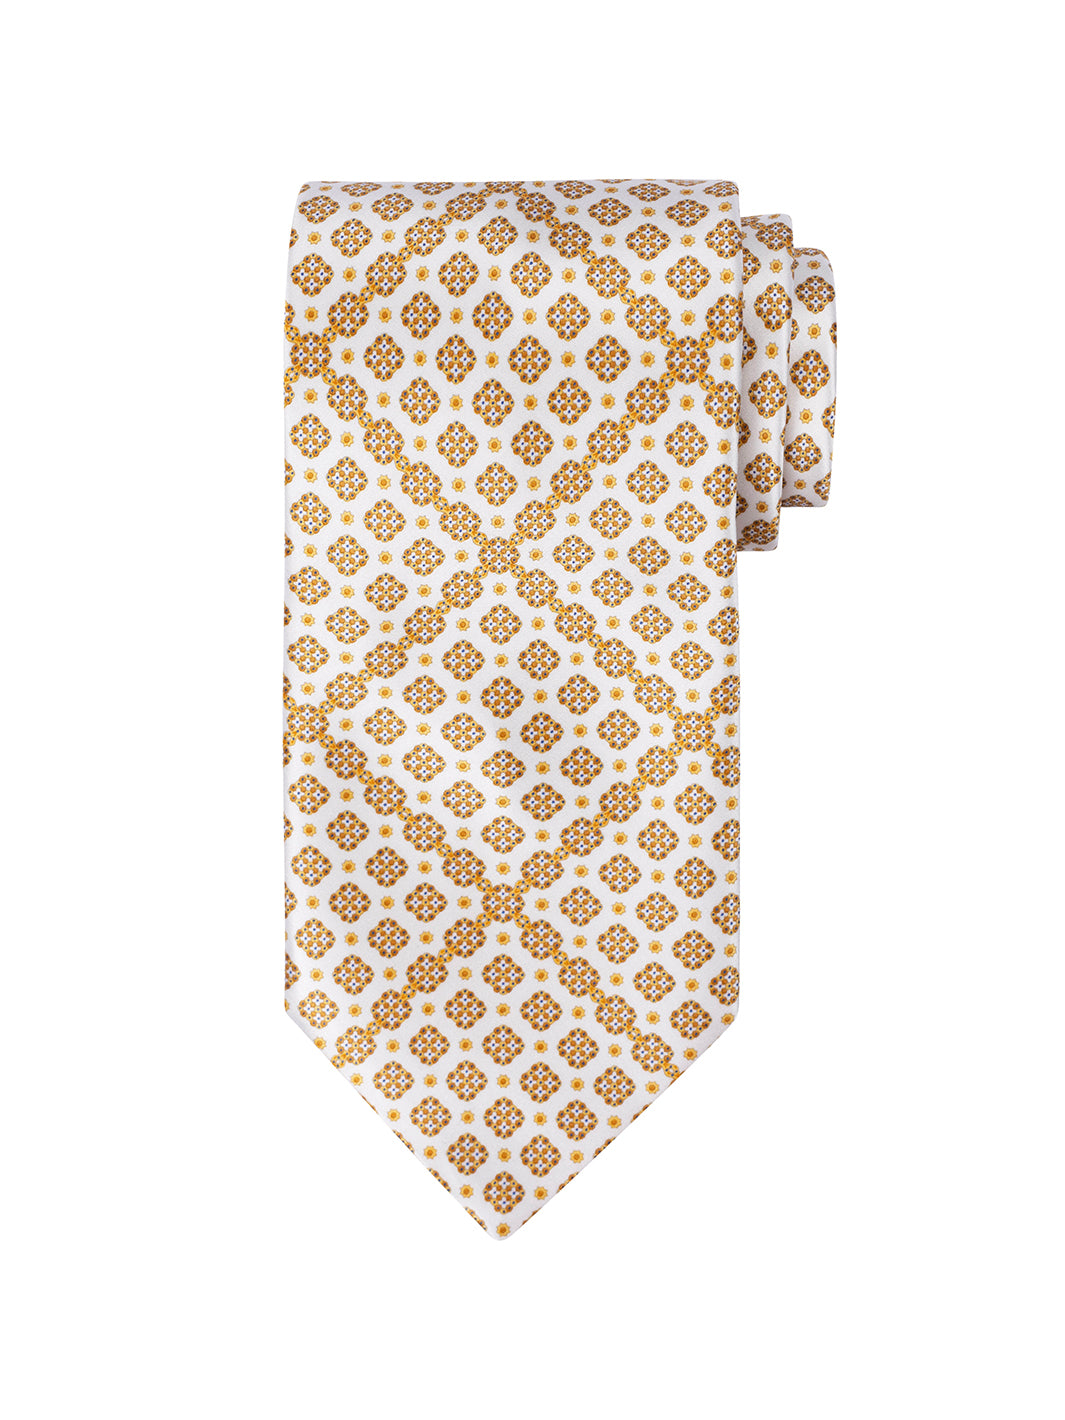 Men's Stefano Ricci Tie - White and Gold